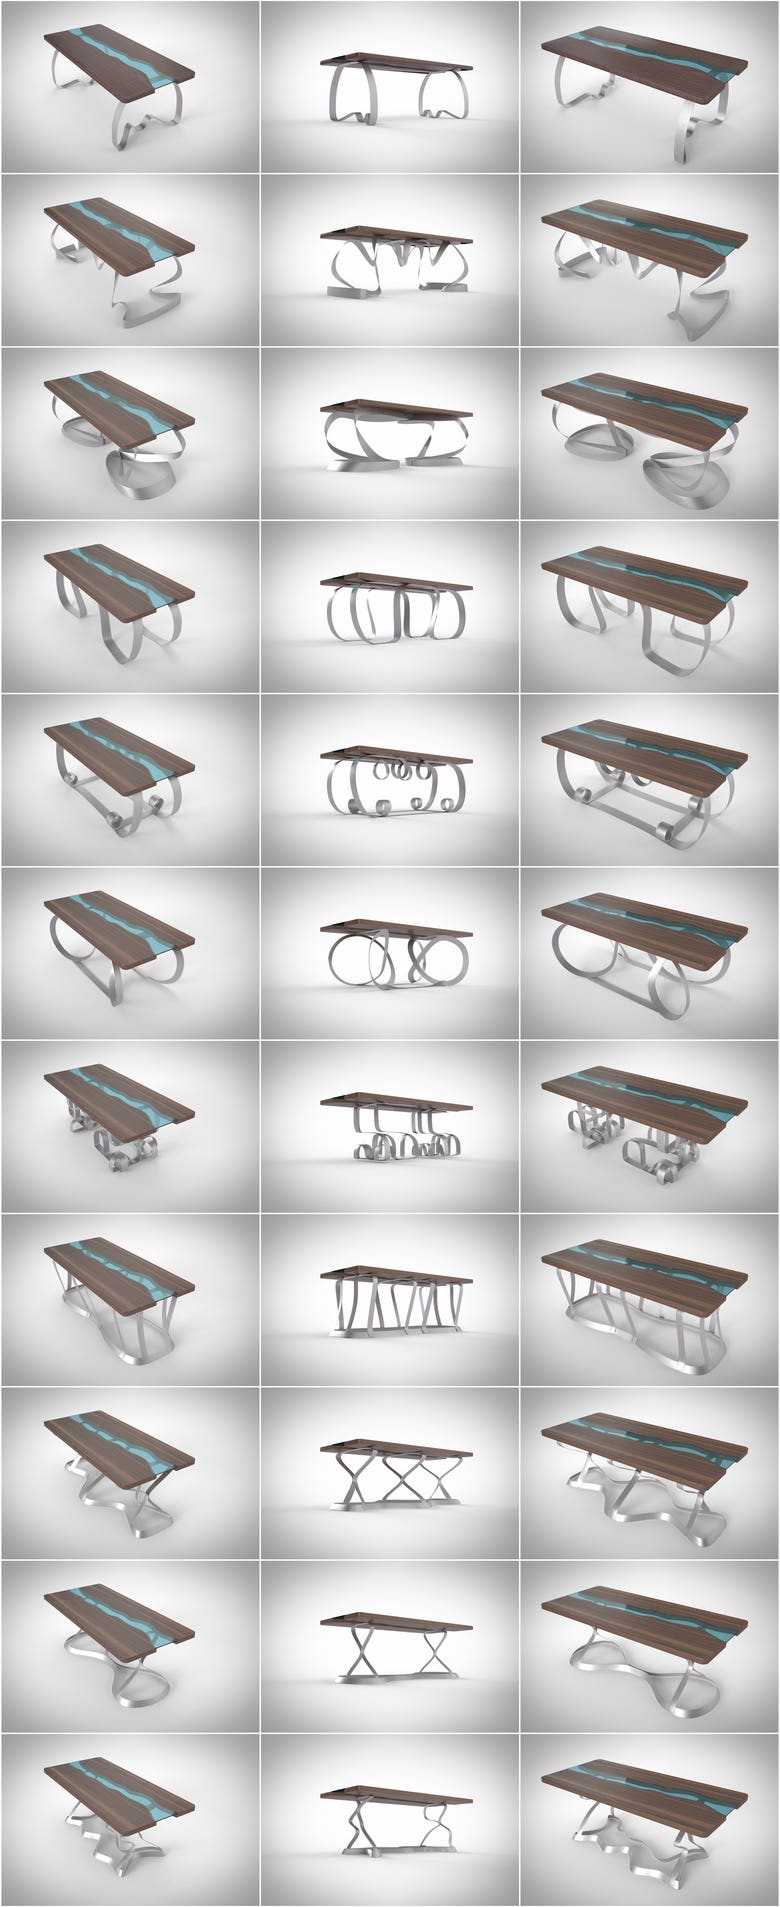 3D furniture design and rendering